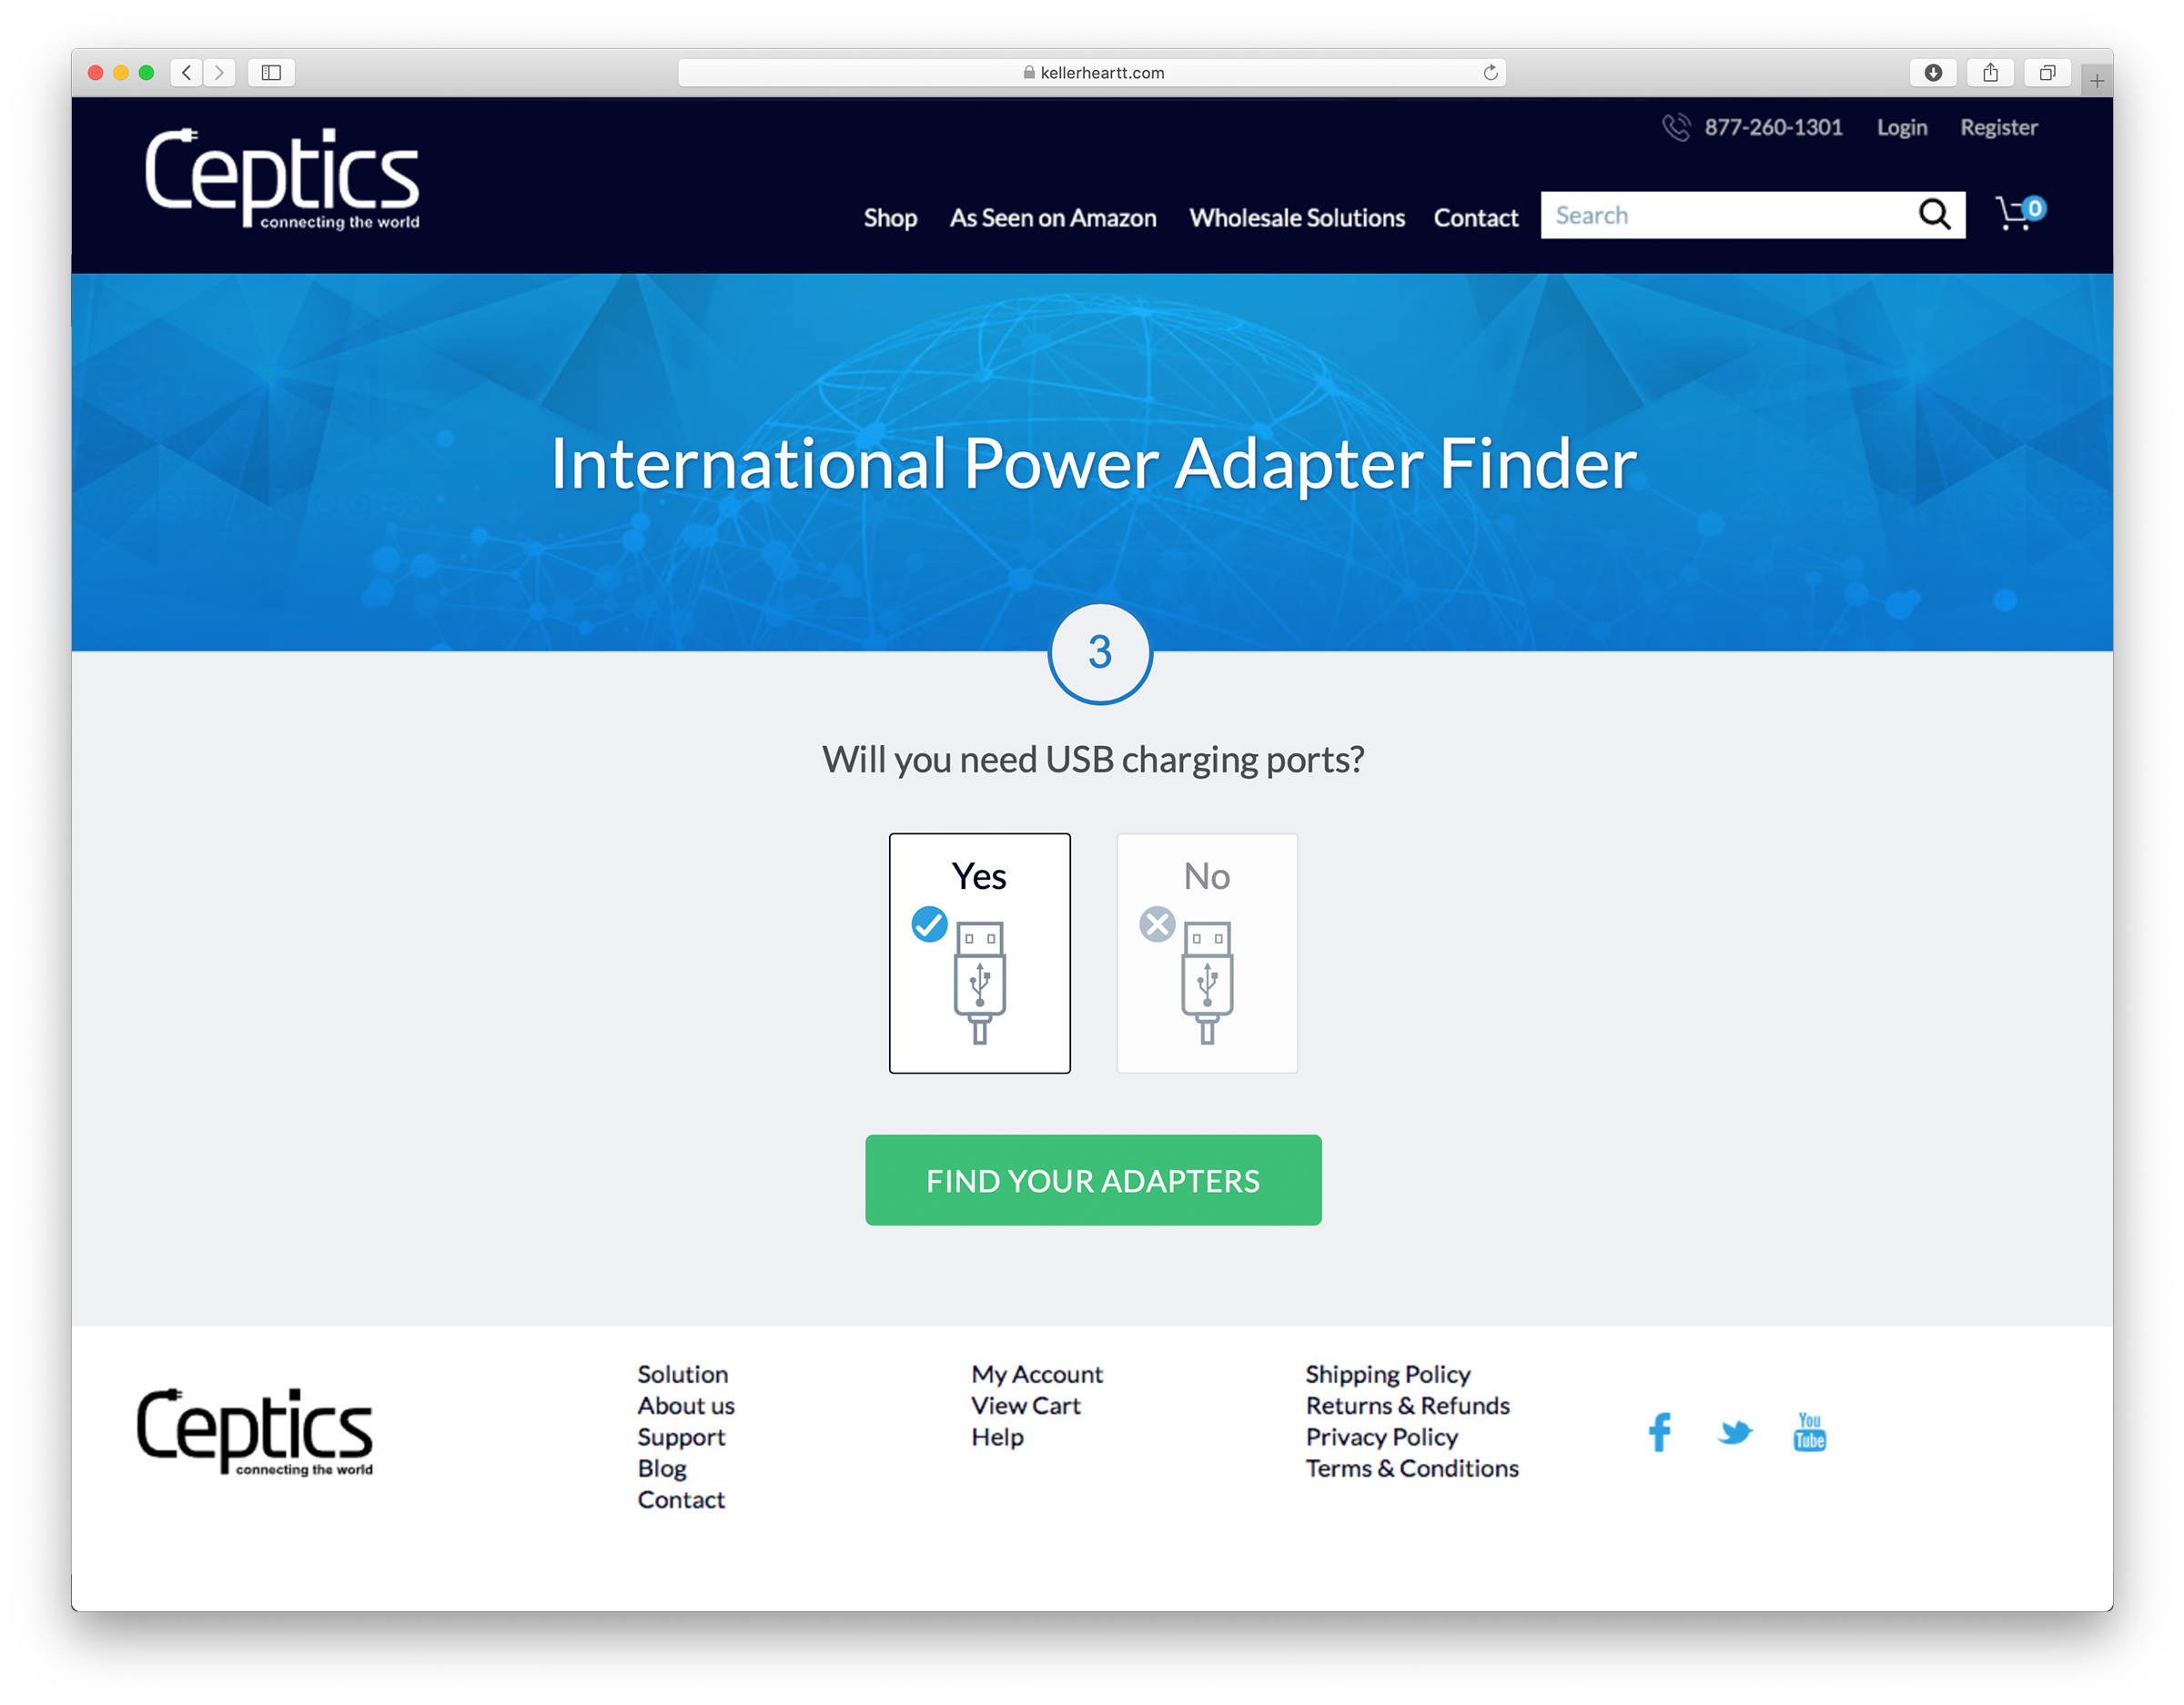 Ceptics site approach